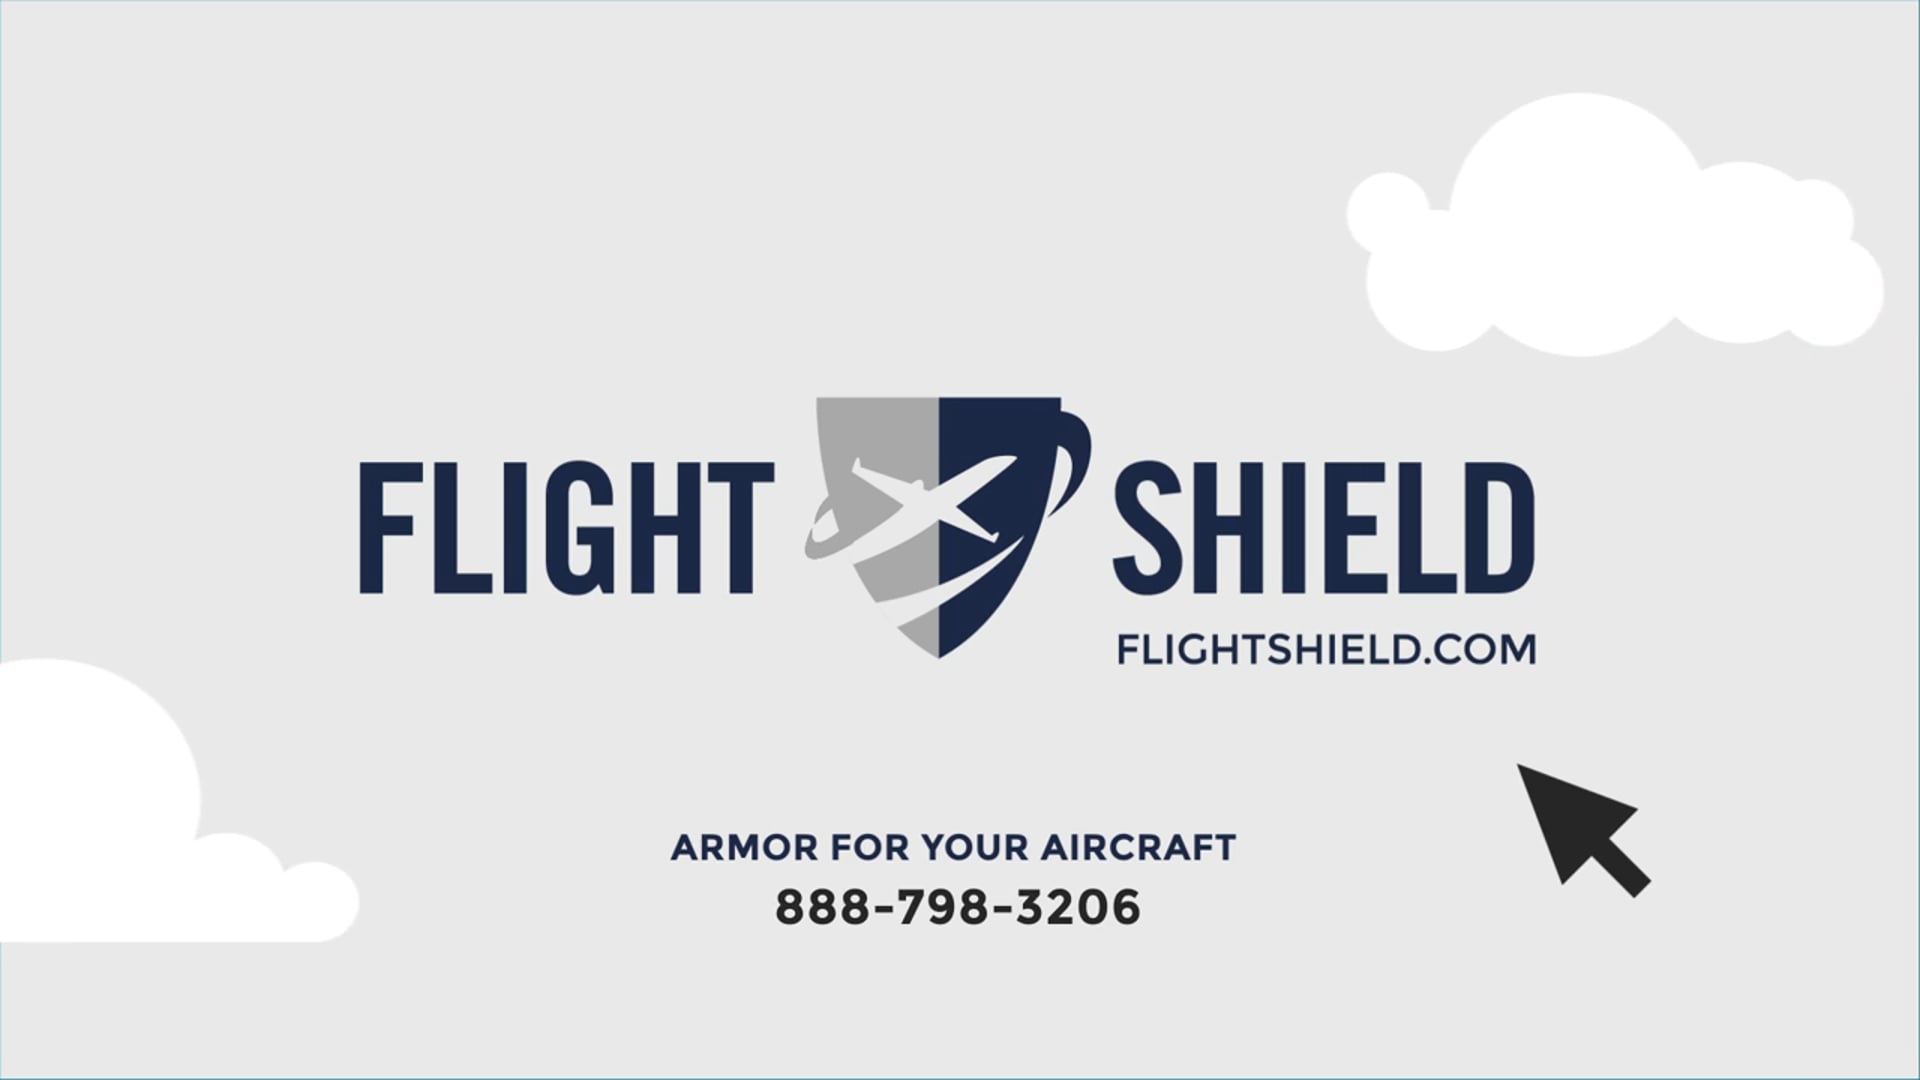 What is FlightShield?